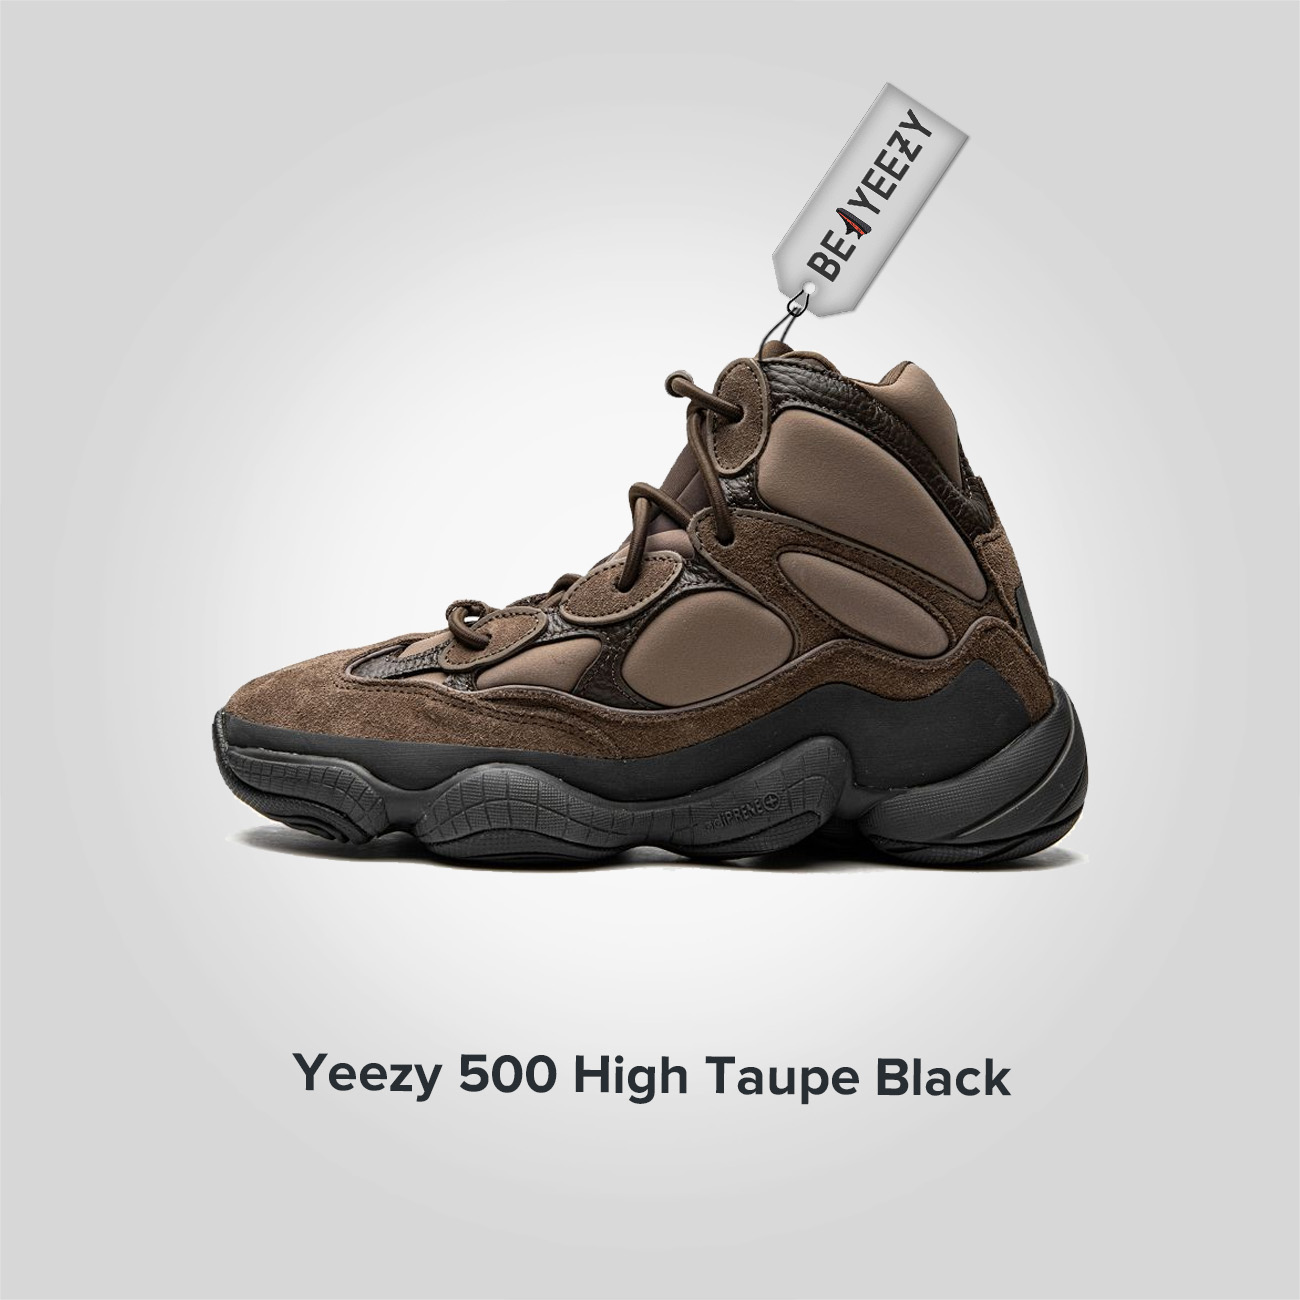 Yeezy 500 High Taupe Black